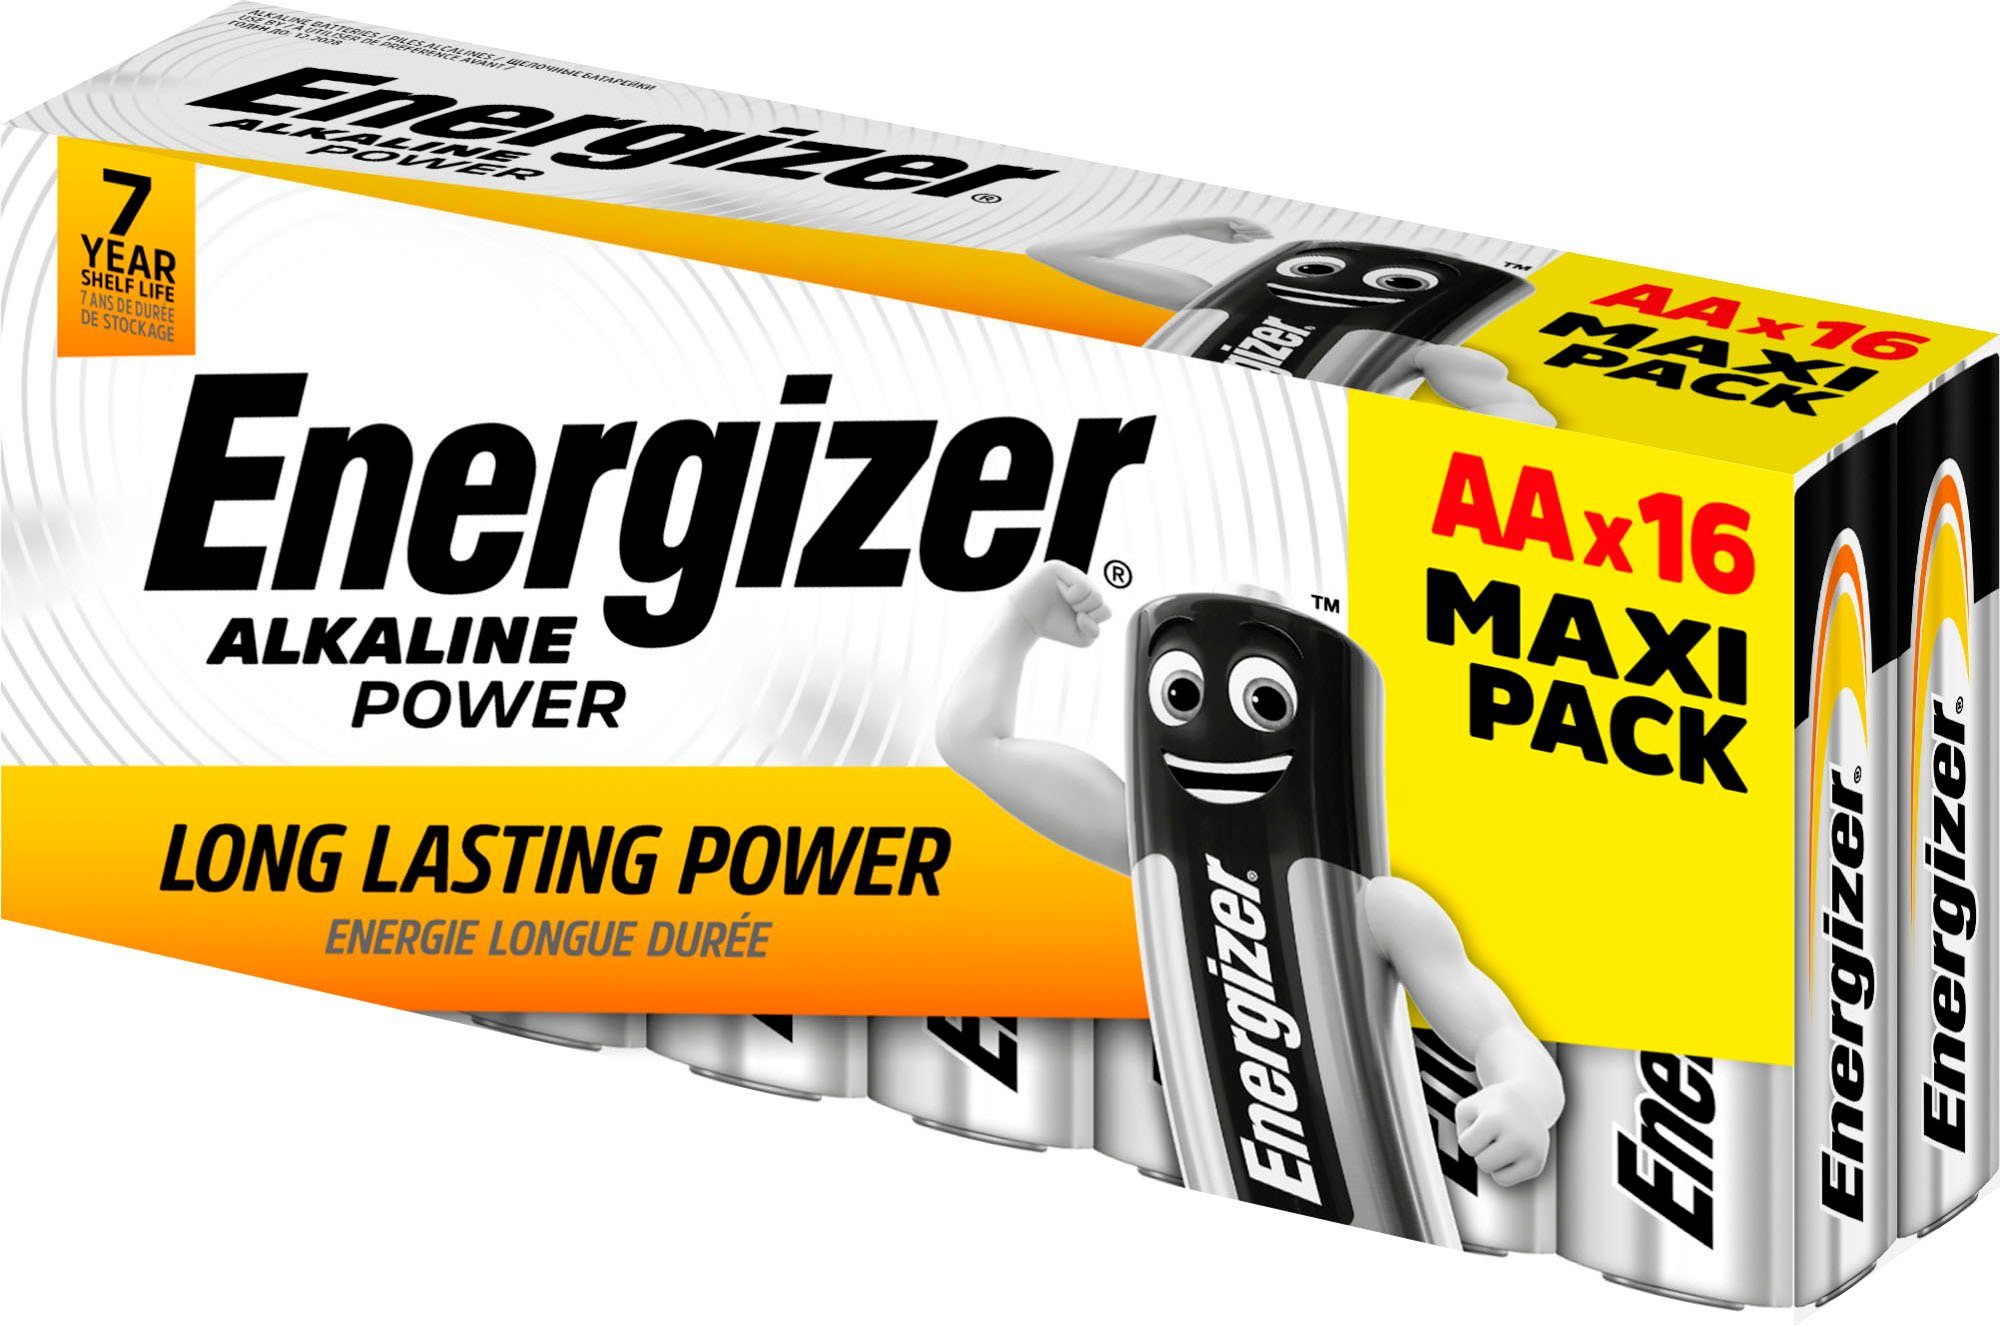 Energizer 16er Pack Alkaline Power AA Batterie, (16 St) | Akkus und PowerBanks